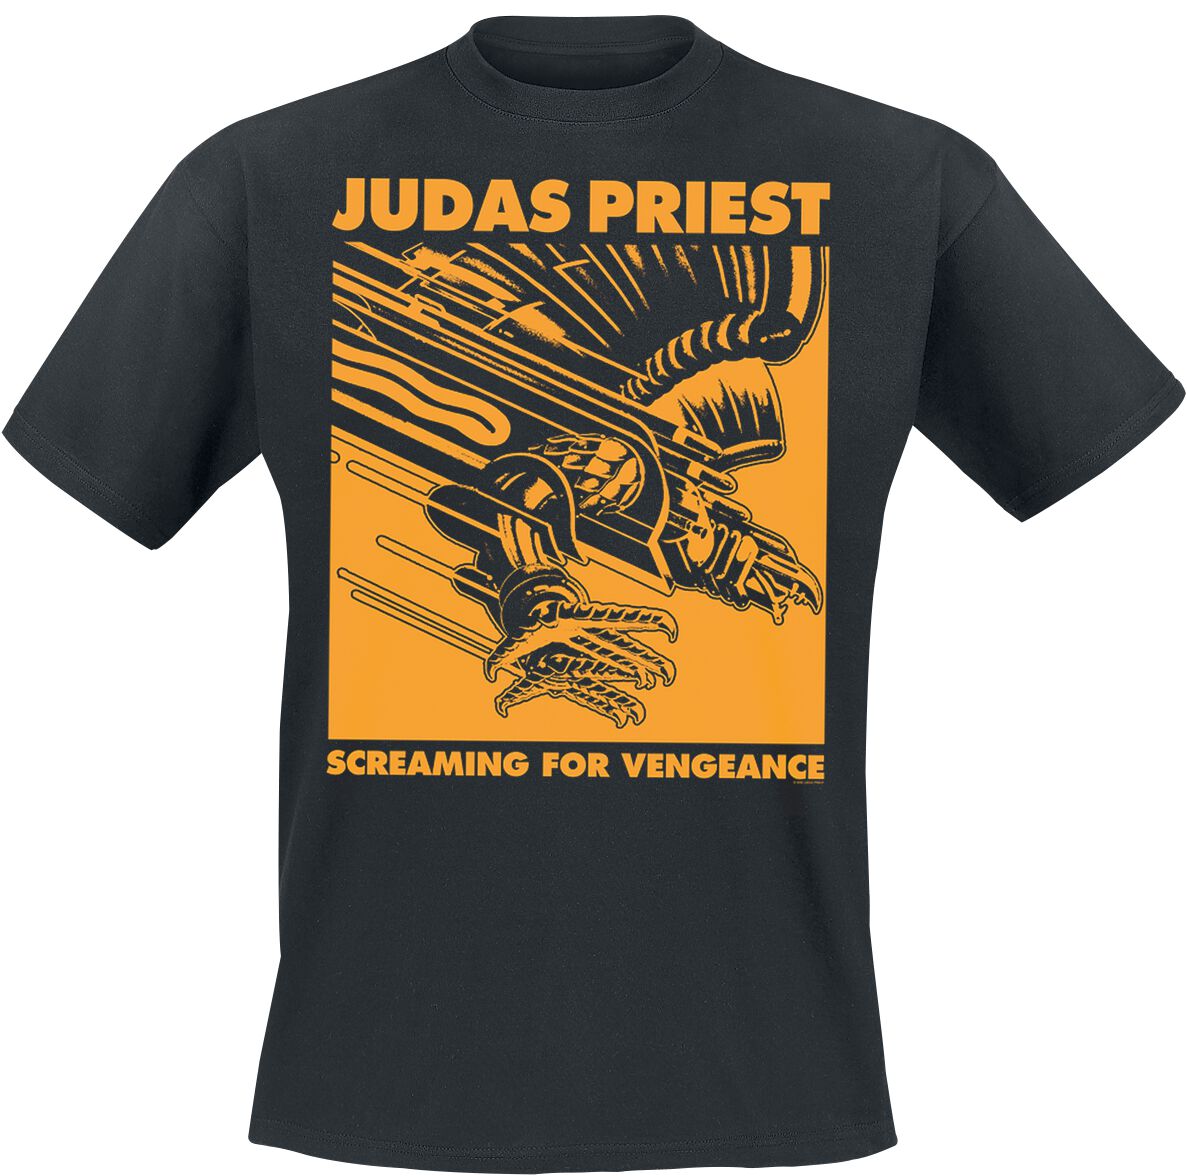 Judas Priest Colour Squared Gold T-Shirt black